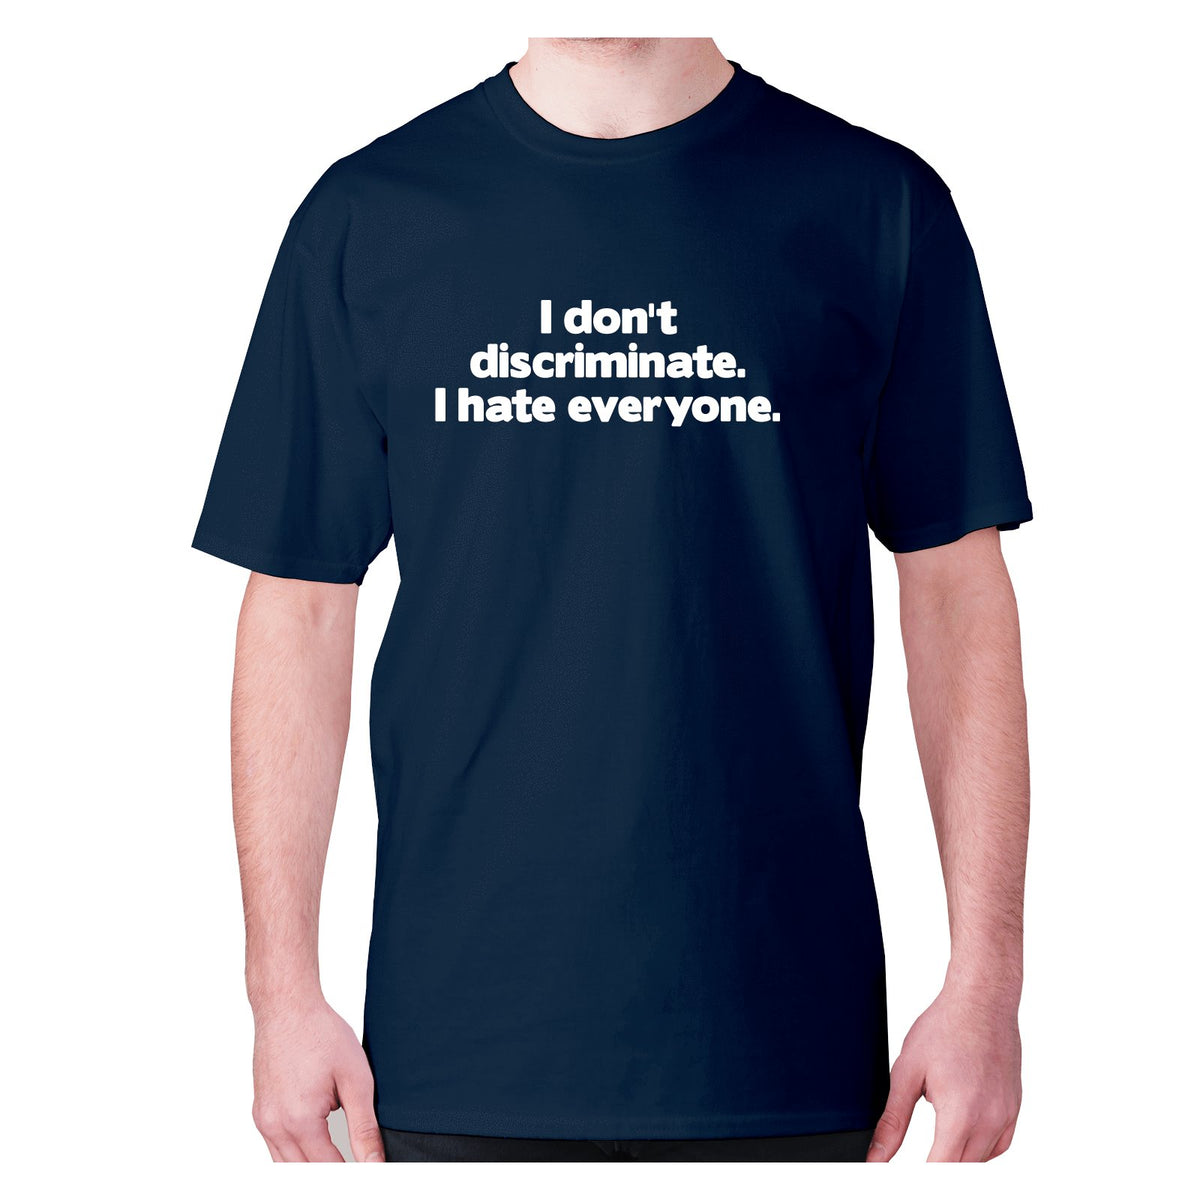 Funny slogan T shirts | Funny T shirts for men | I don't discriminate ...